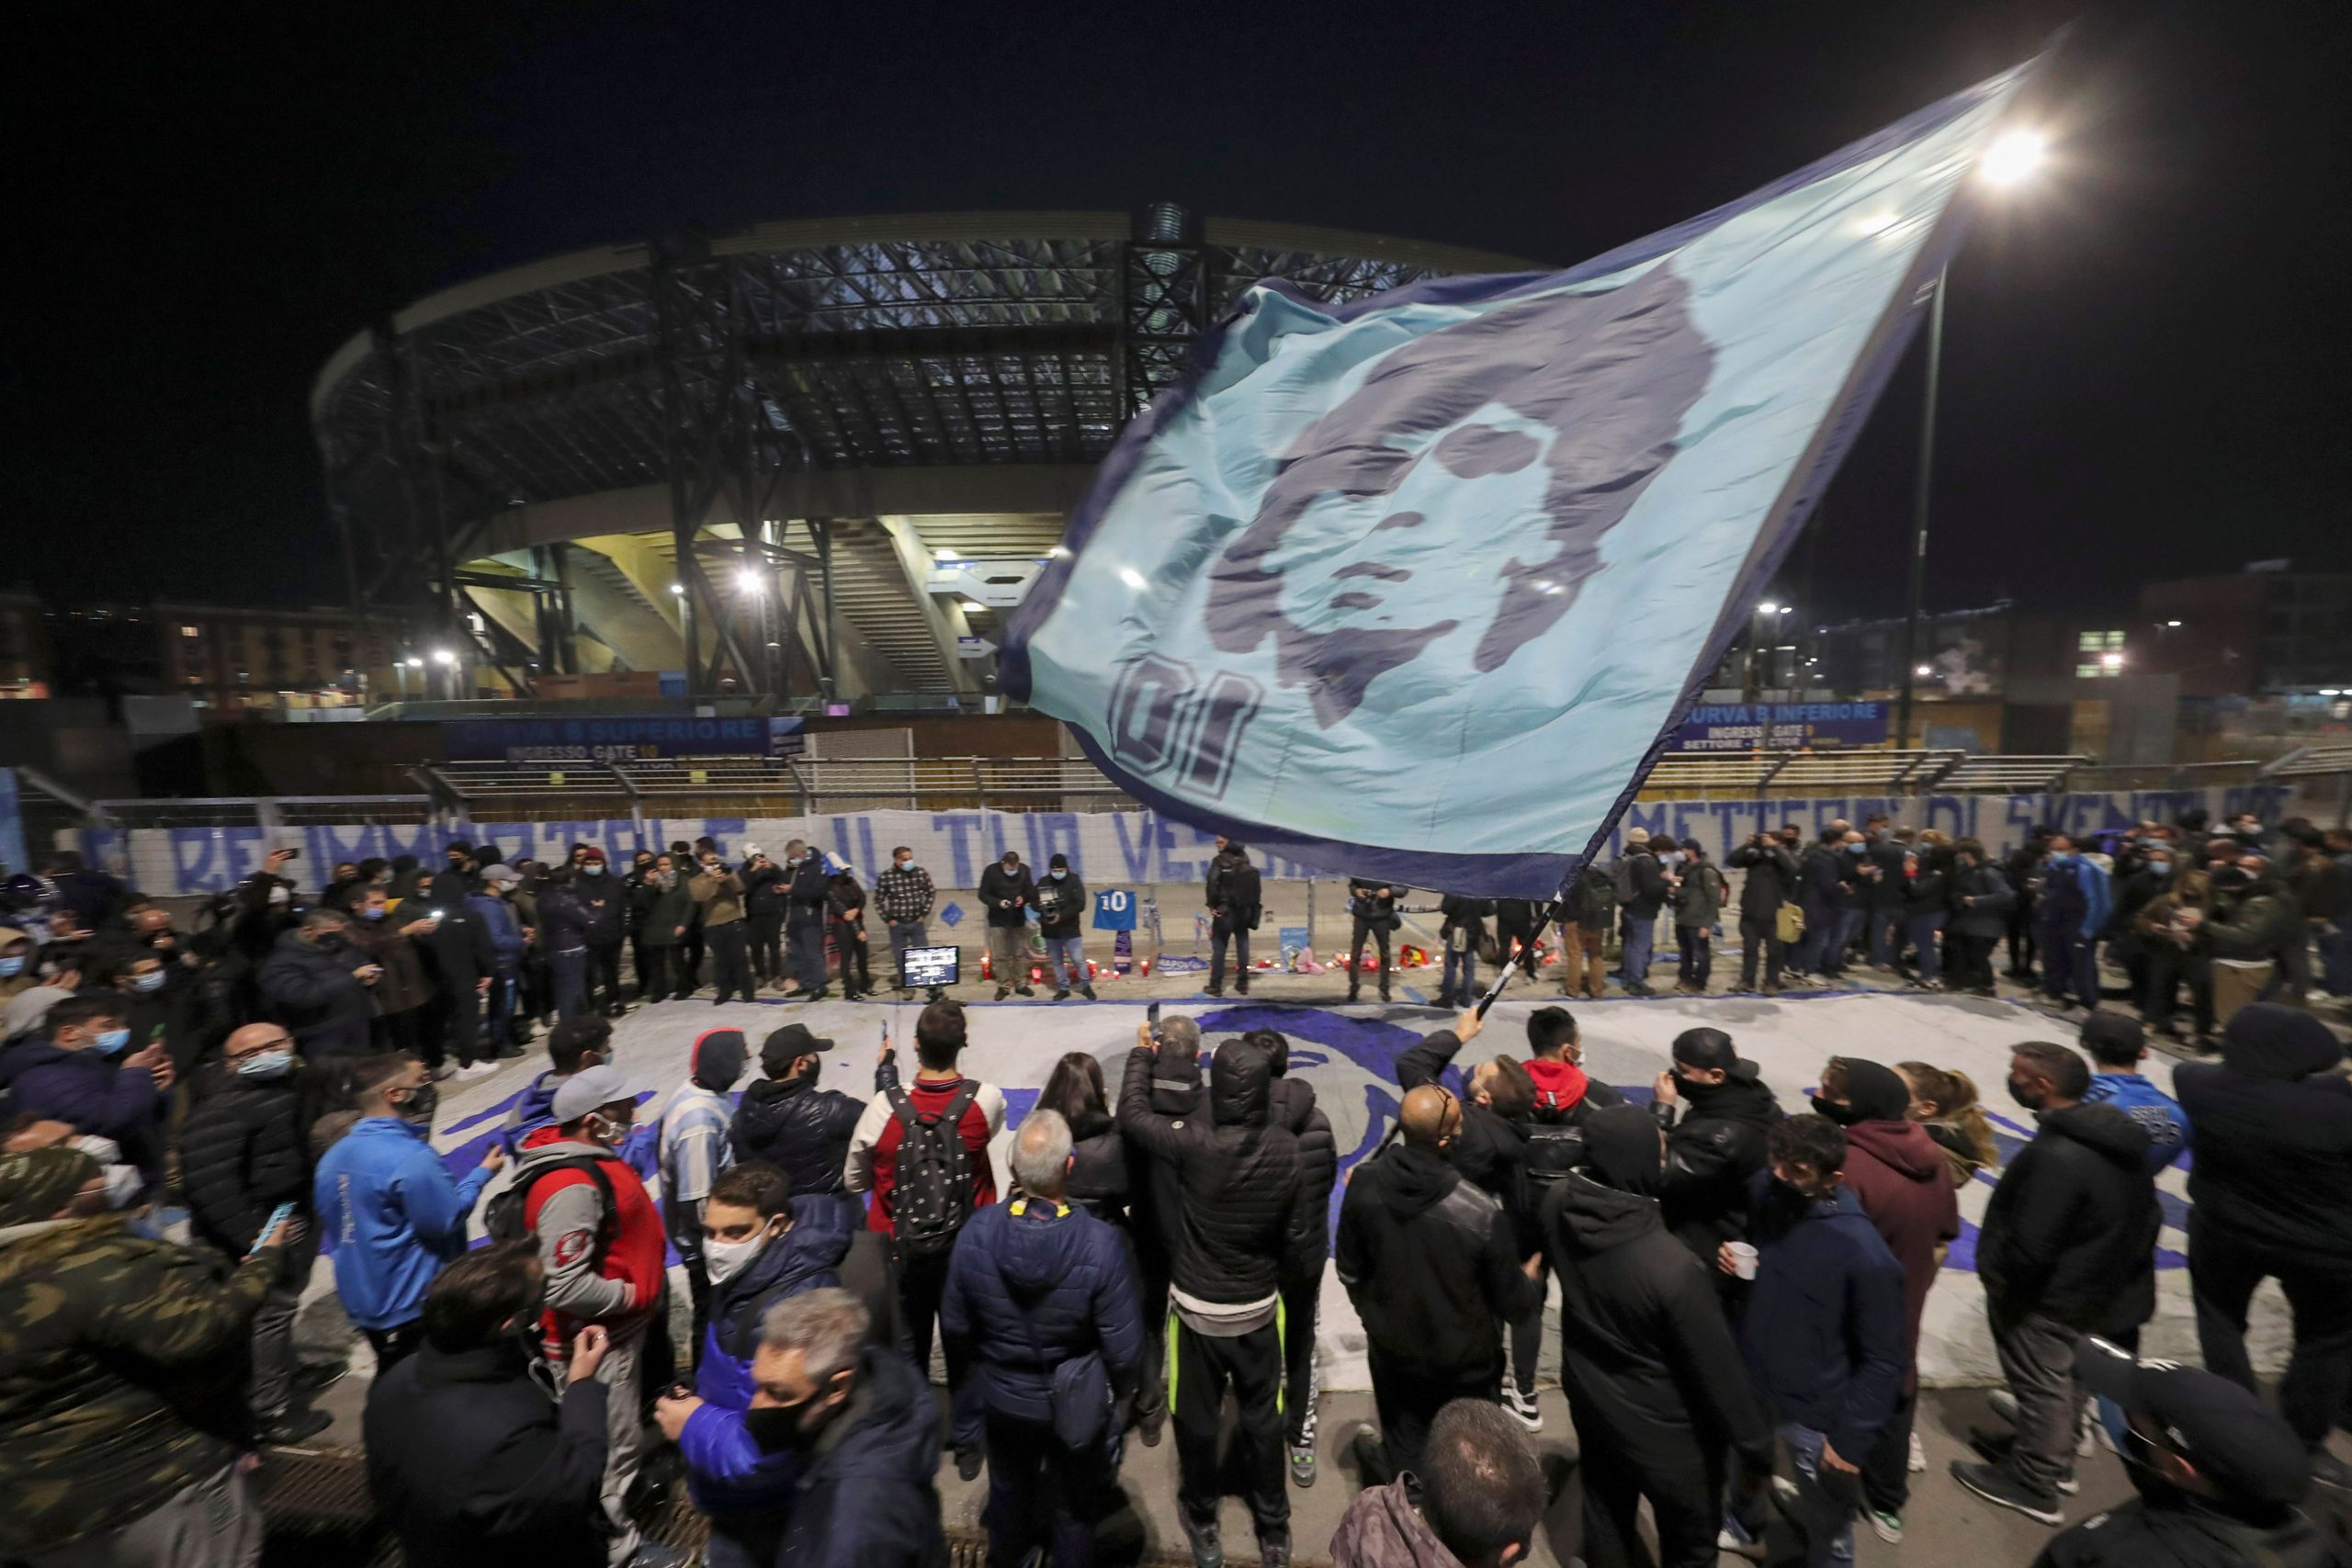 Naples mayor wants to rename San Paolo stadium after Maradona